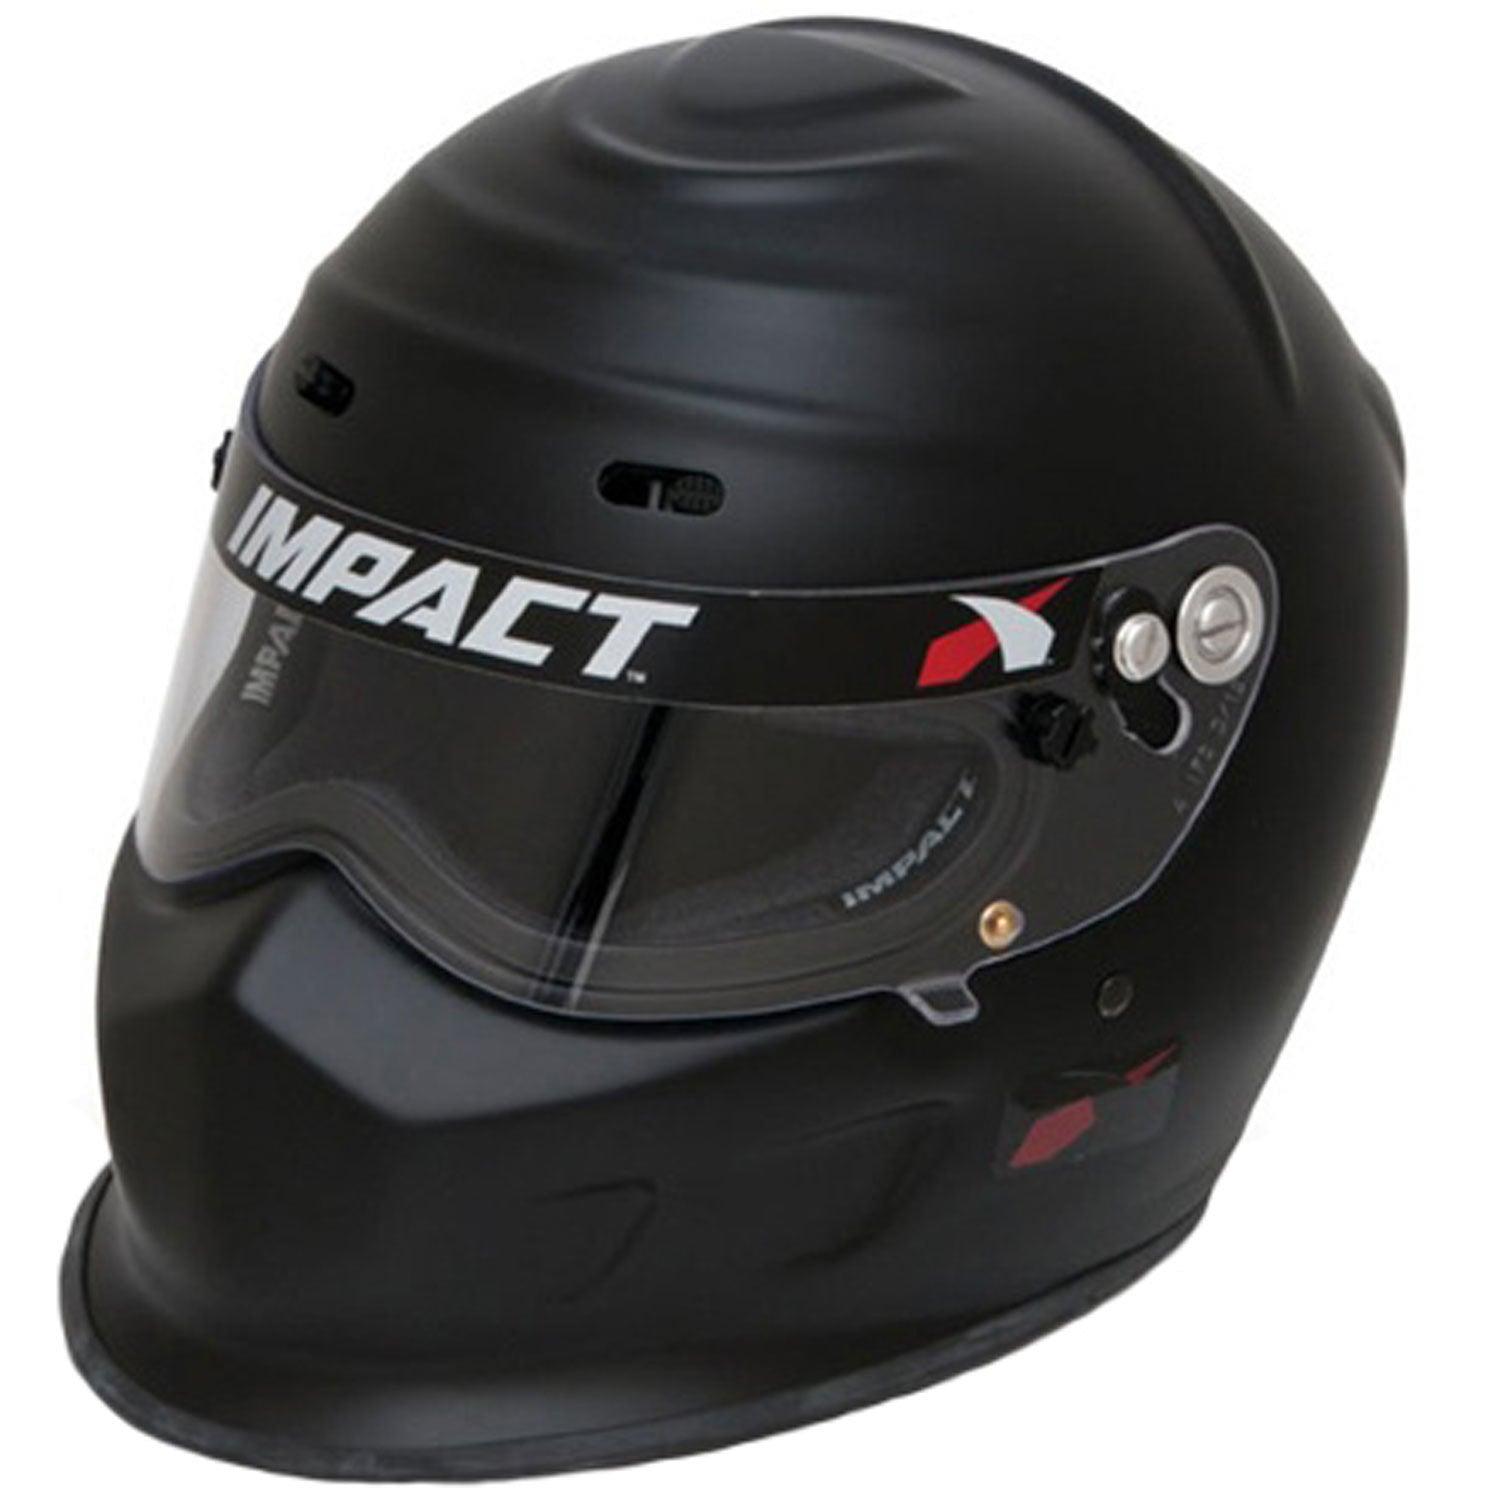 Helmet Champ X-Large Flat Black SA2020 - Burlile Performance Products